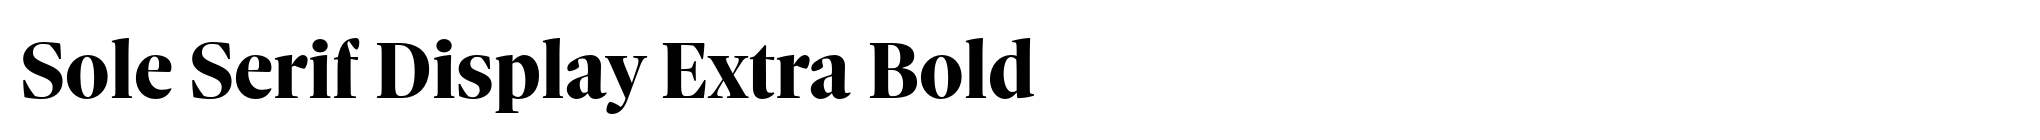 Sole Serif Display Extra Bold image